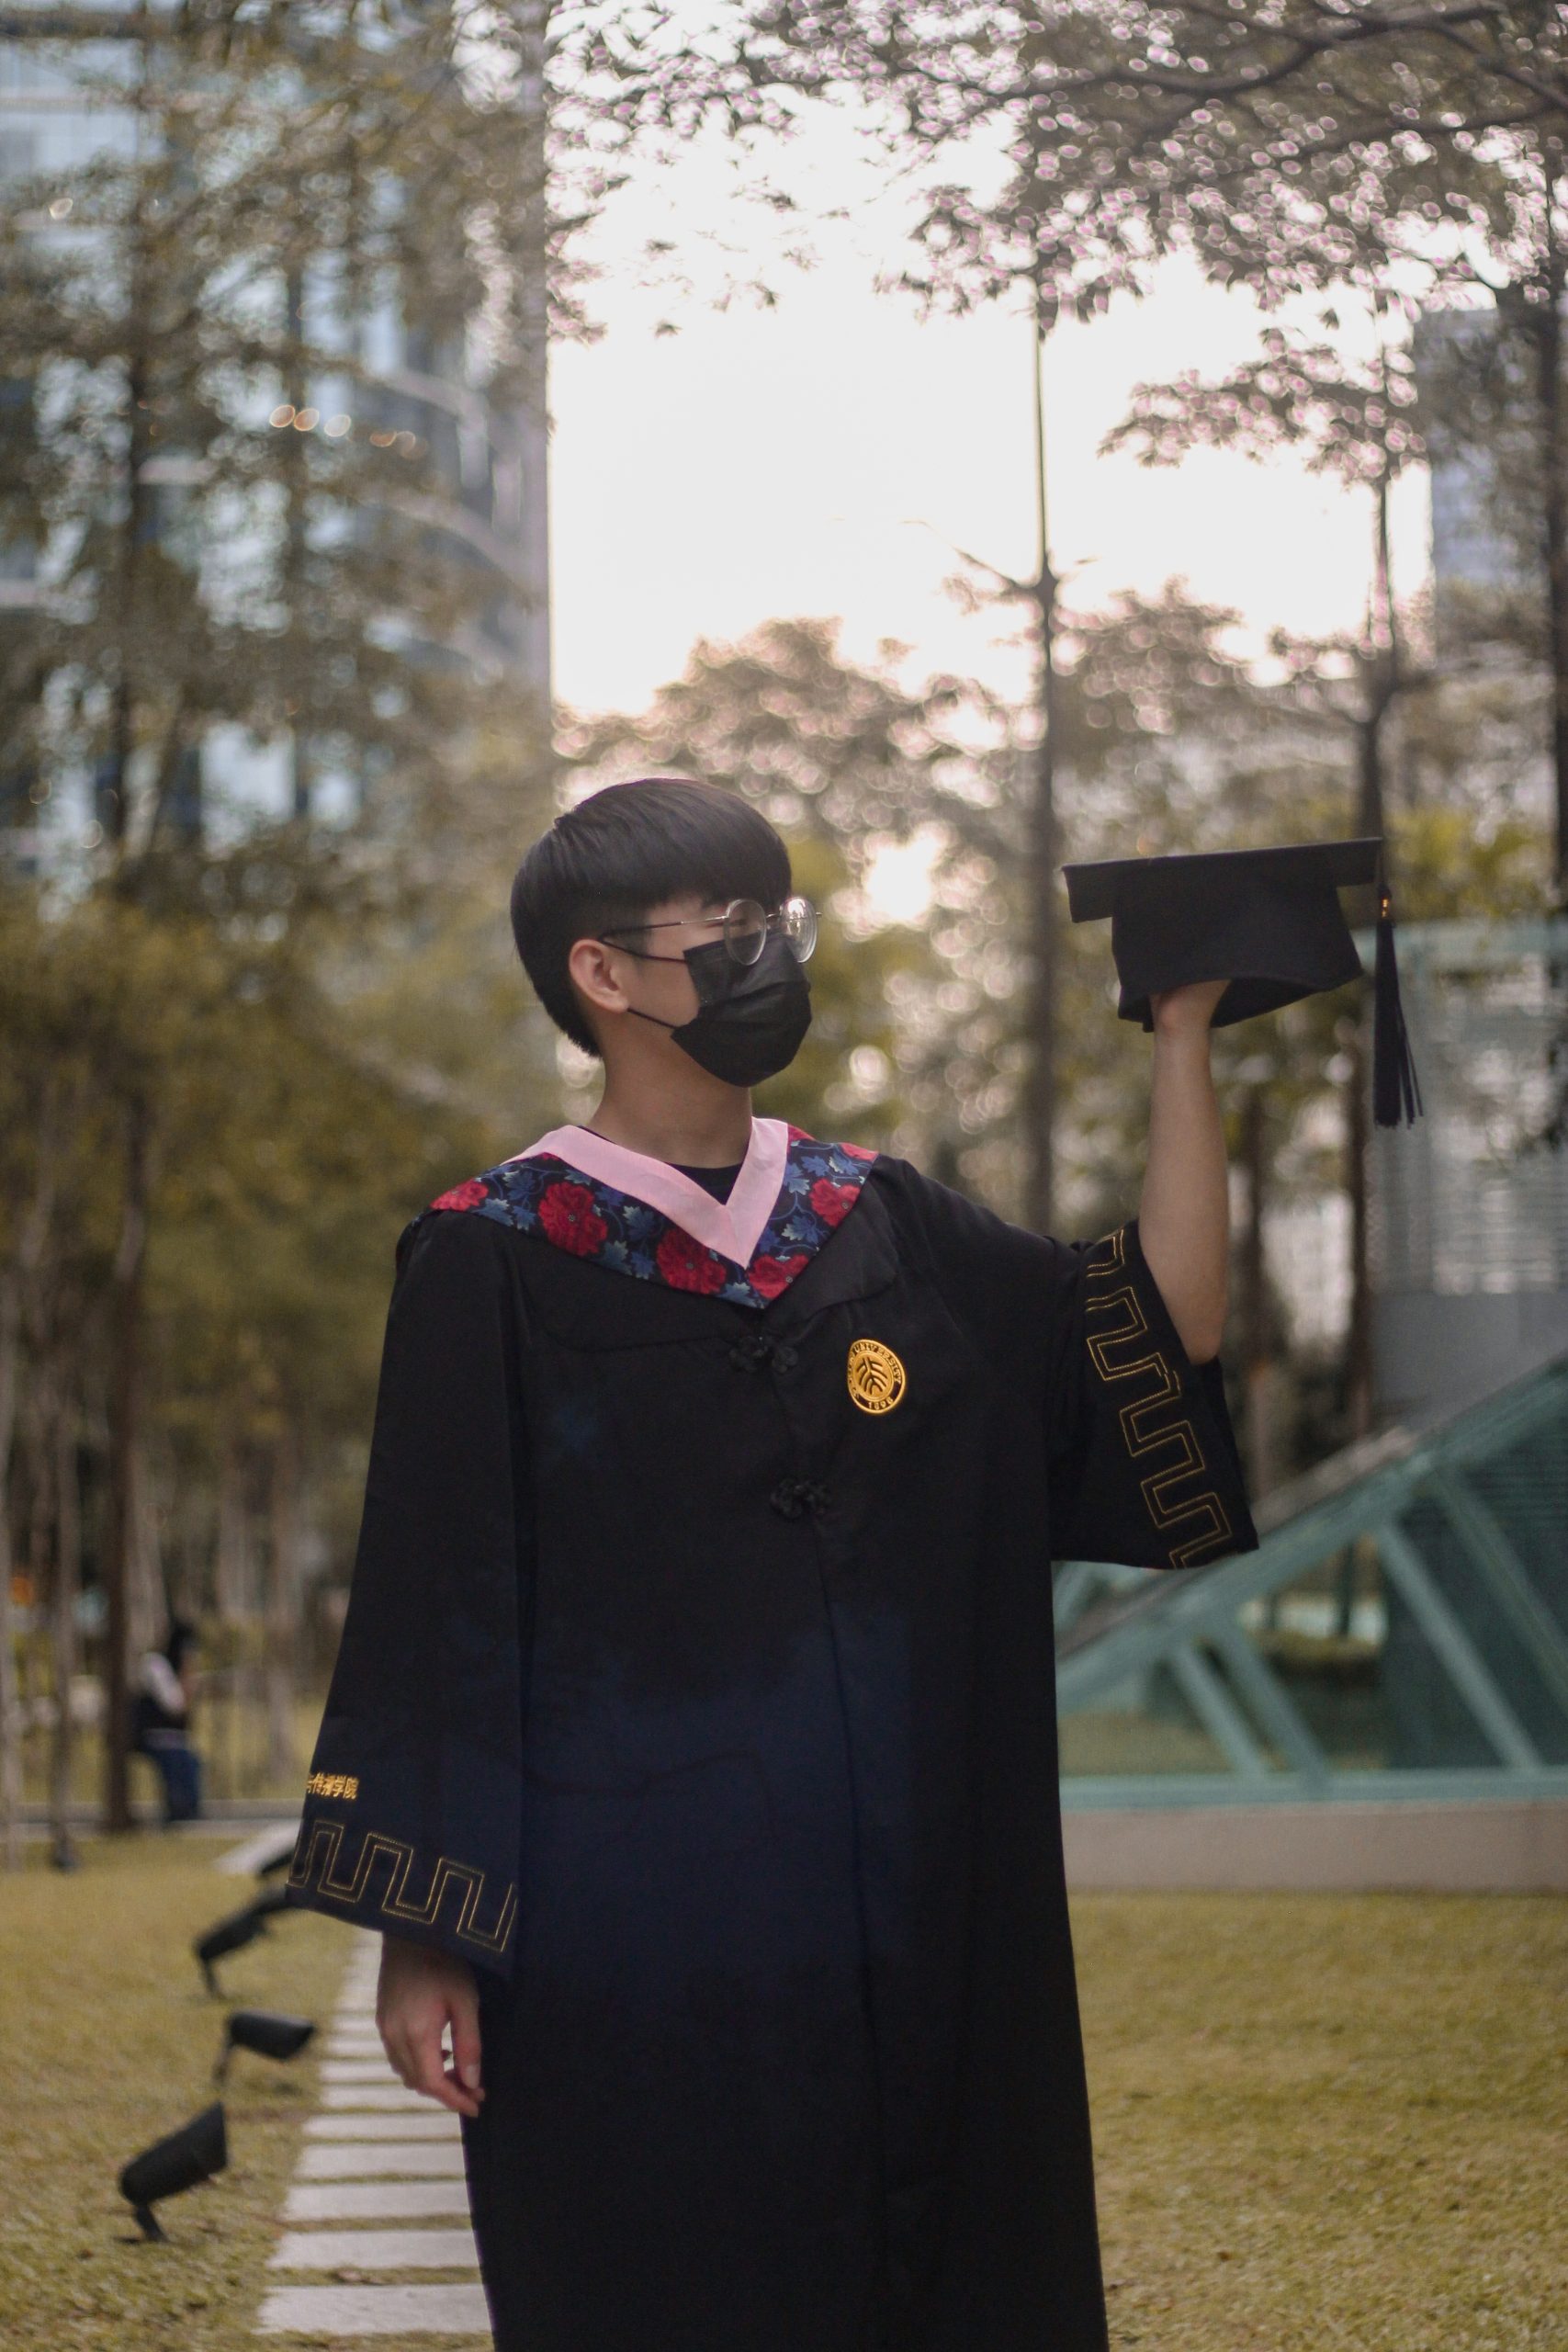 Graduating from university